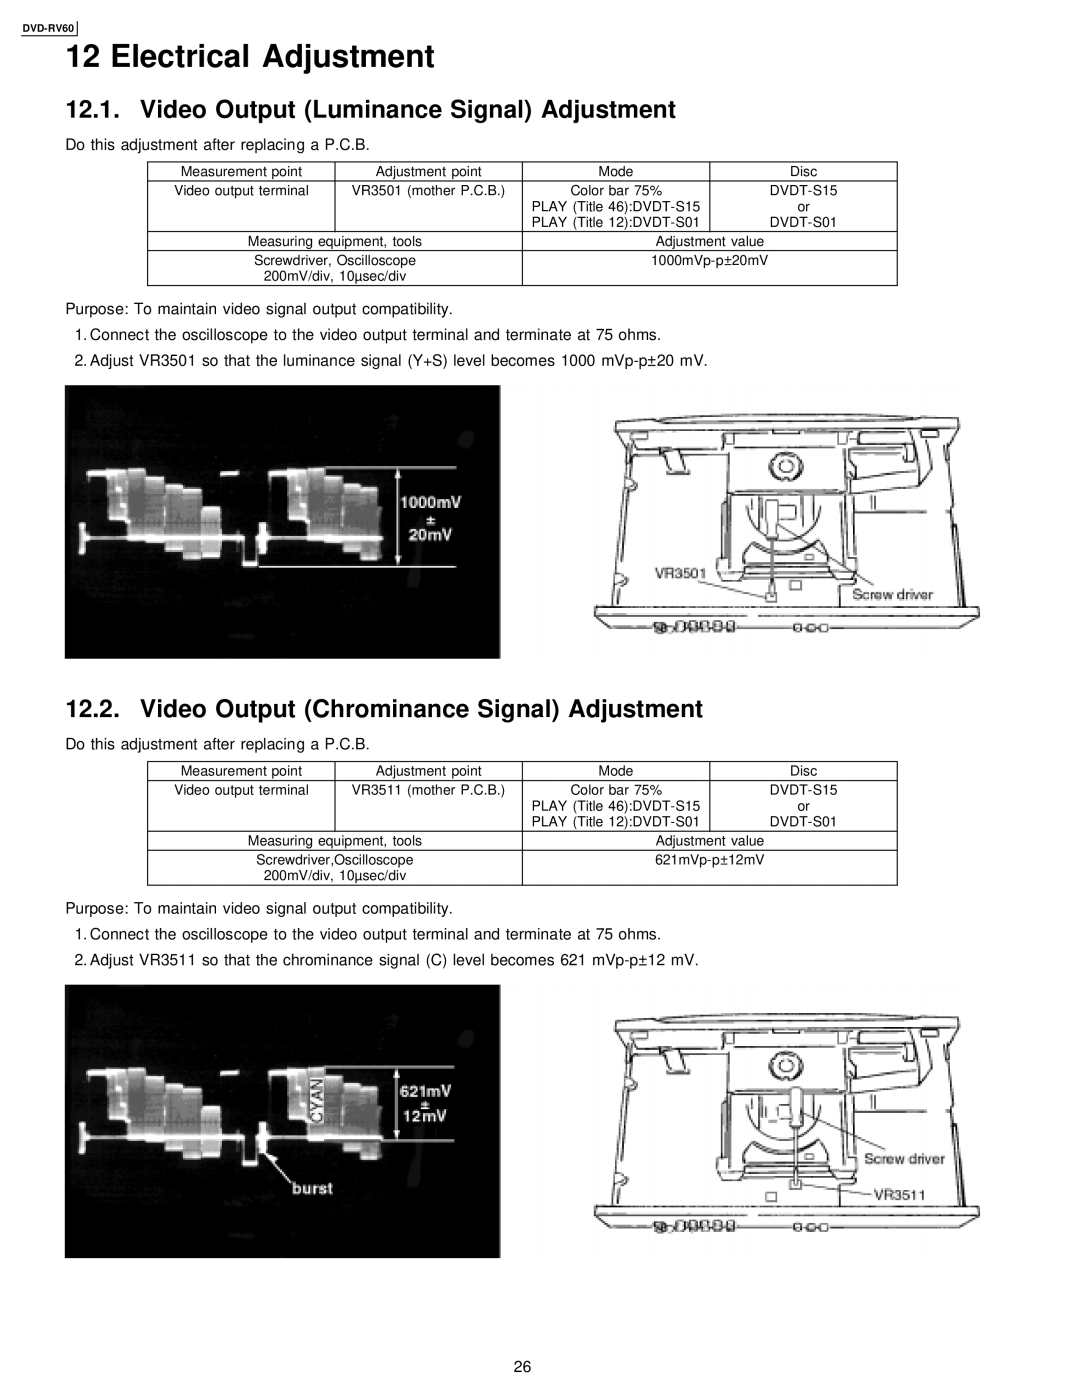 Panasonic DVDRV60 specifications Electrical Adjustment, Video Output Luminance Signal Adjustment 